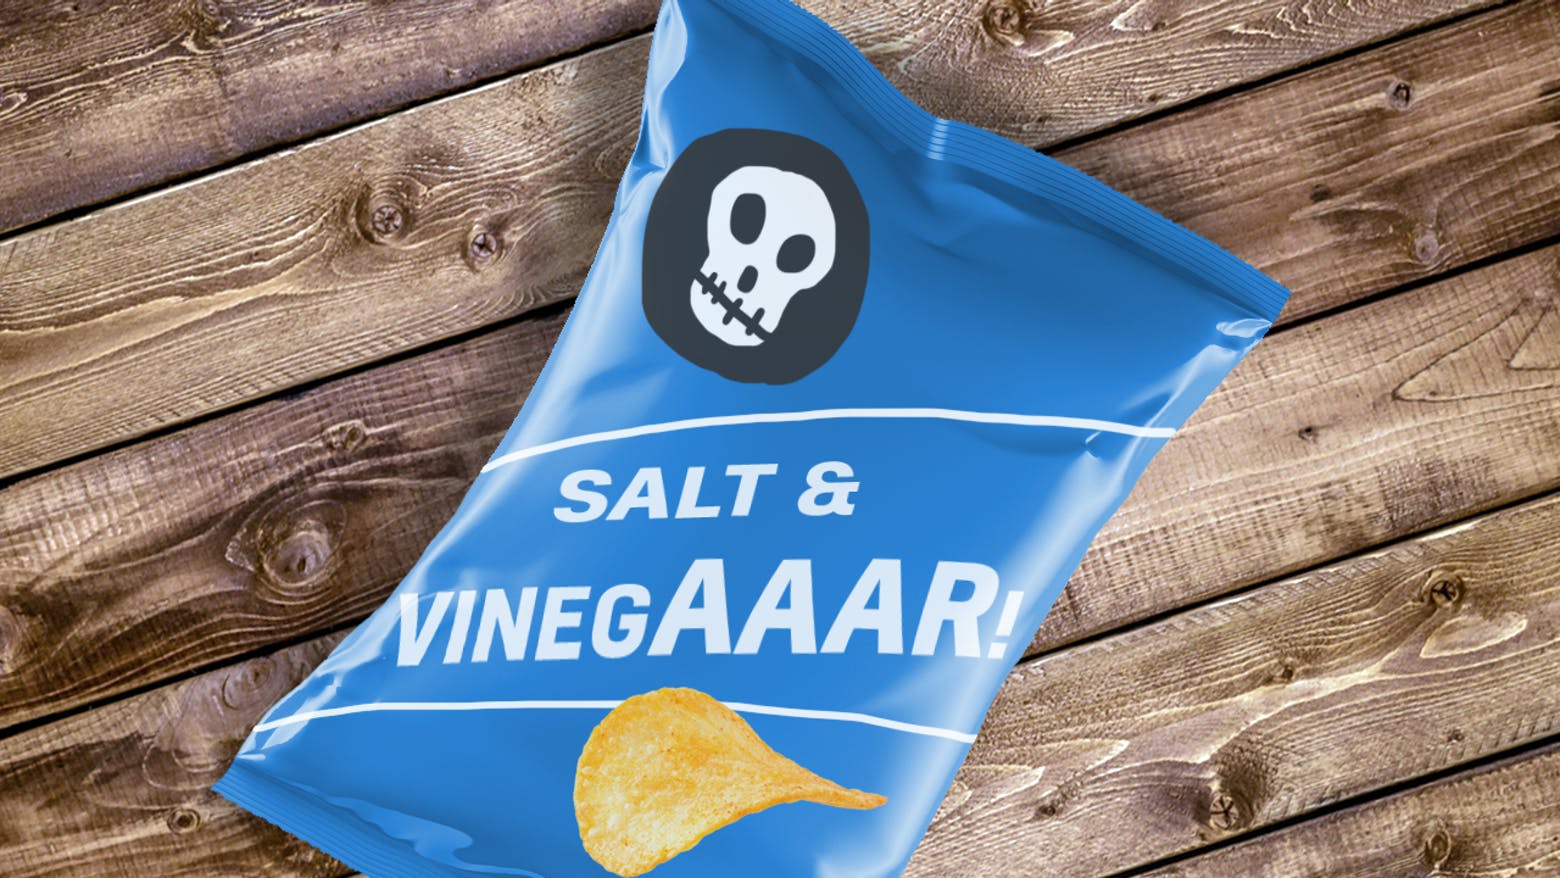 Bag of crisps that reads "Salt & Vinegaaar!'